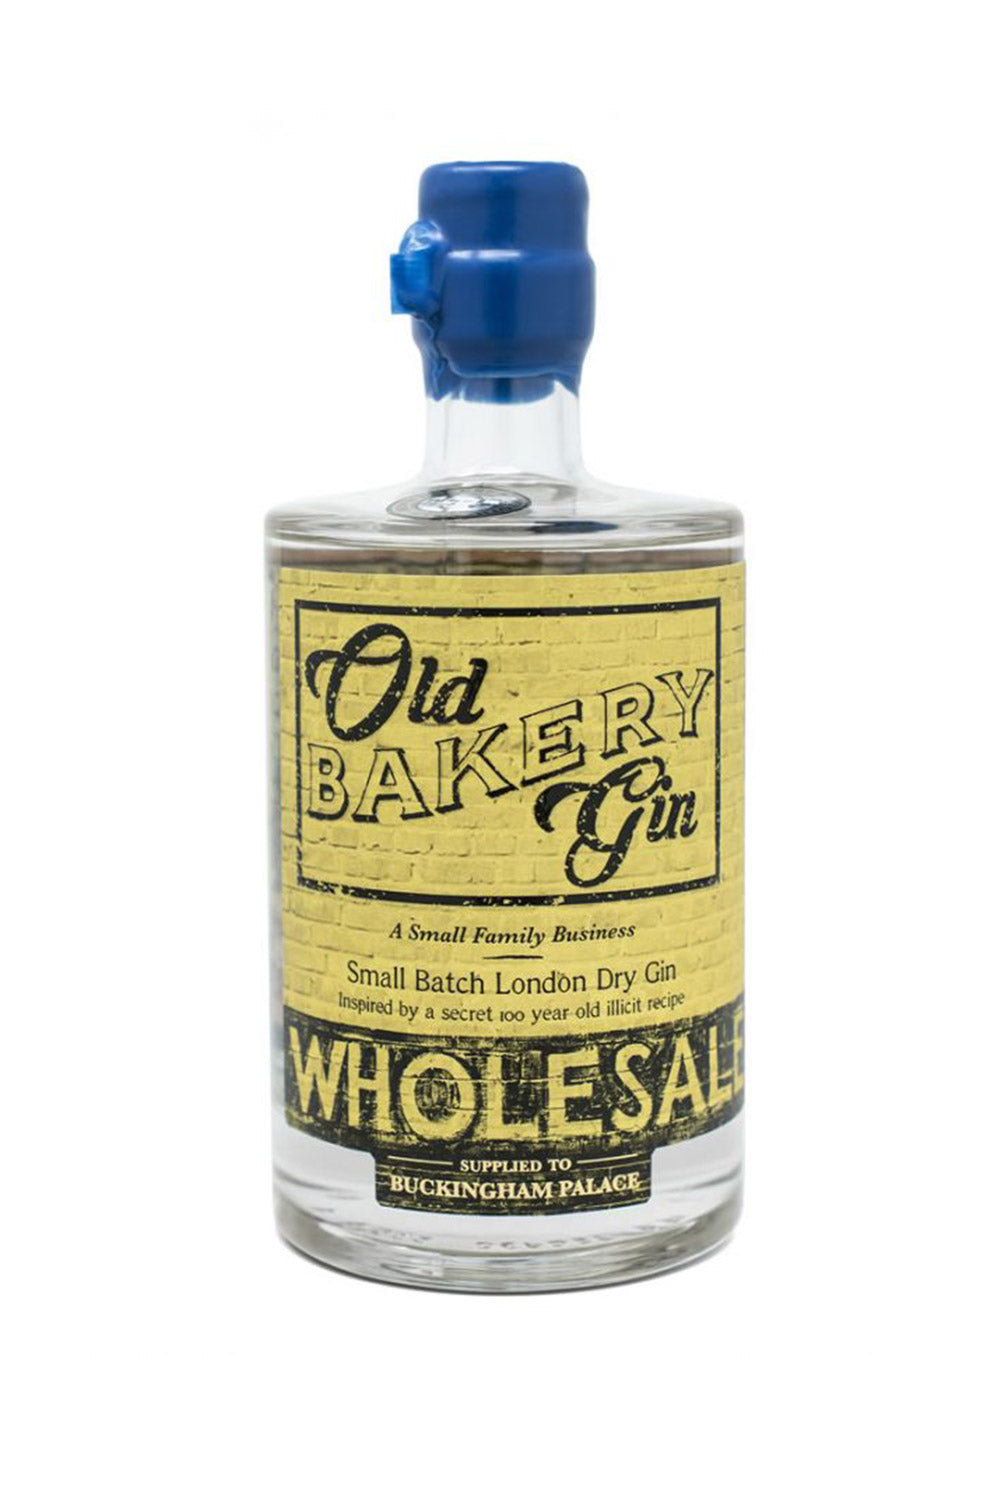 Old Bakery Navy Strength Gin